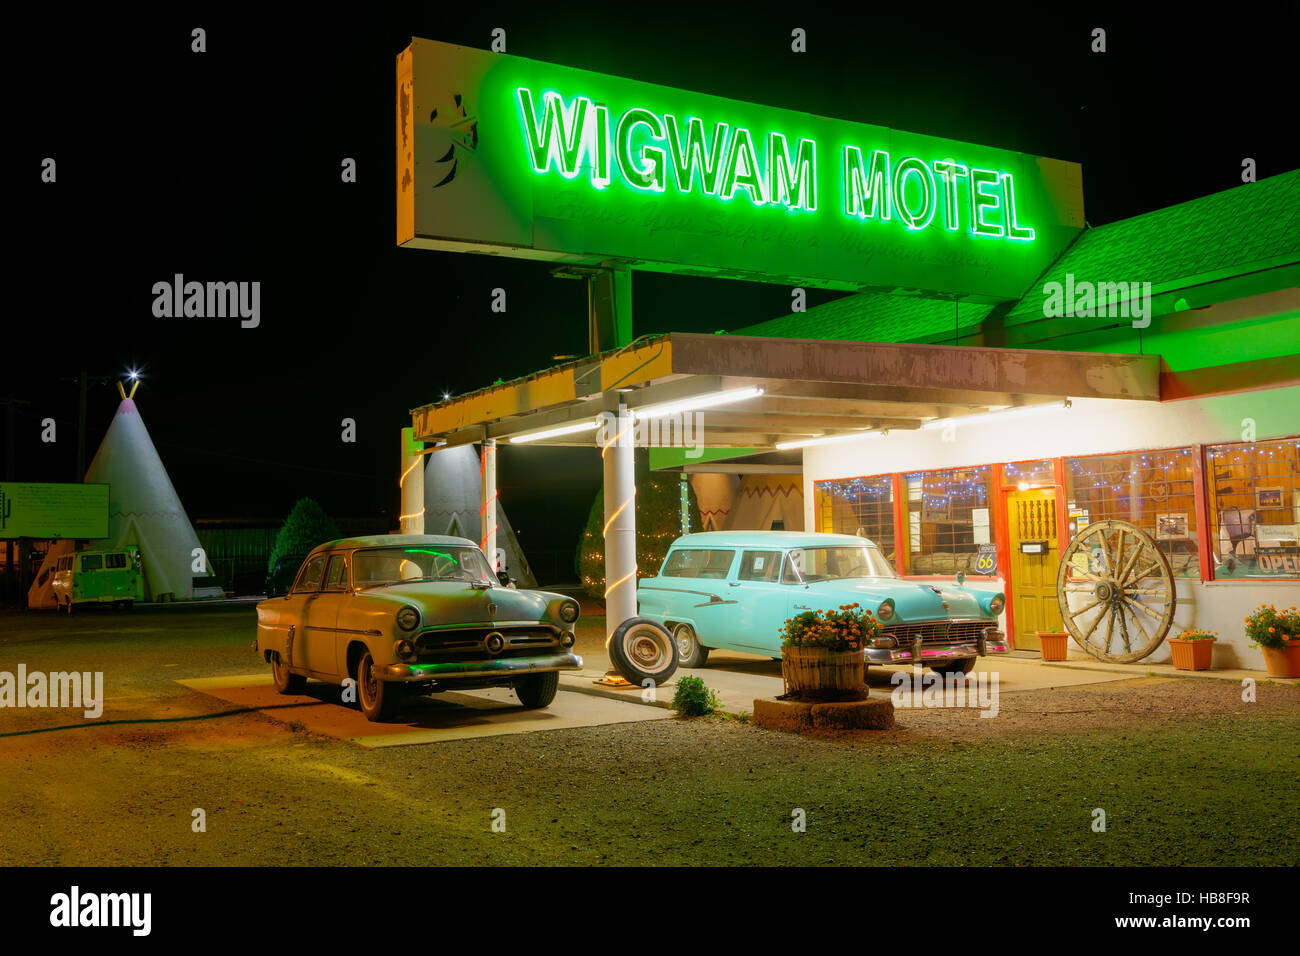 Wigwam Motel at night, Holbrook, Arizona, USA Stock Photo